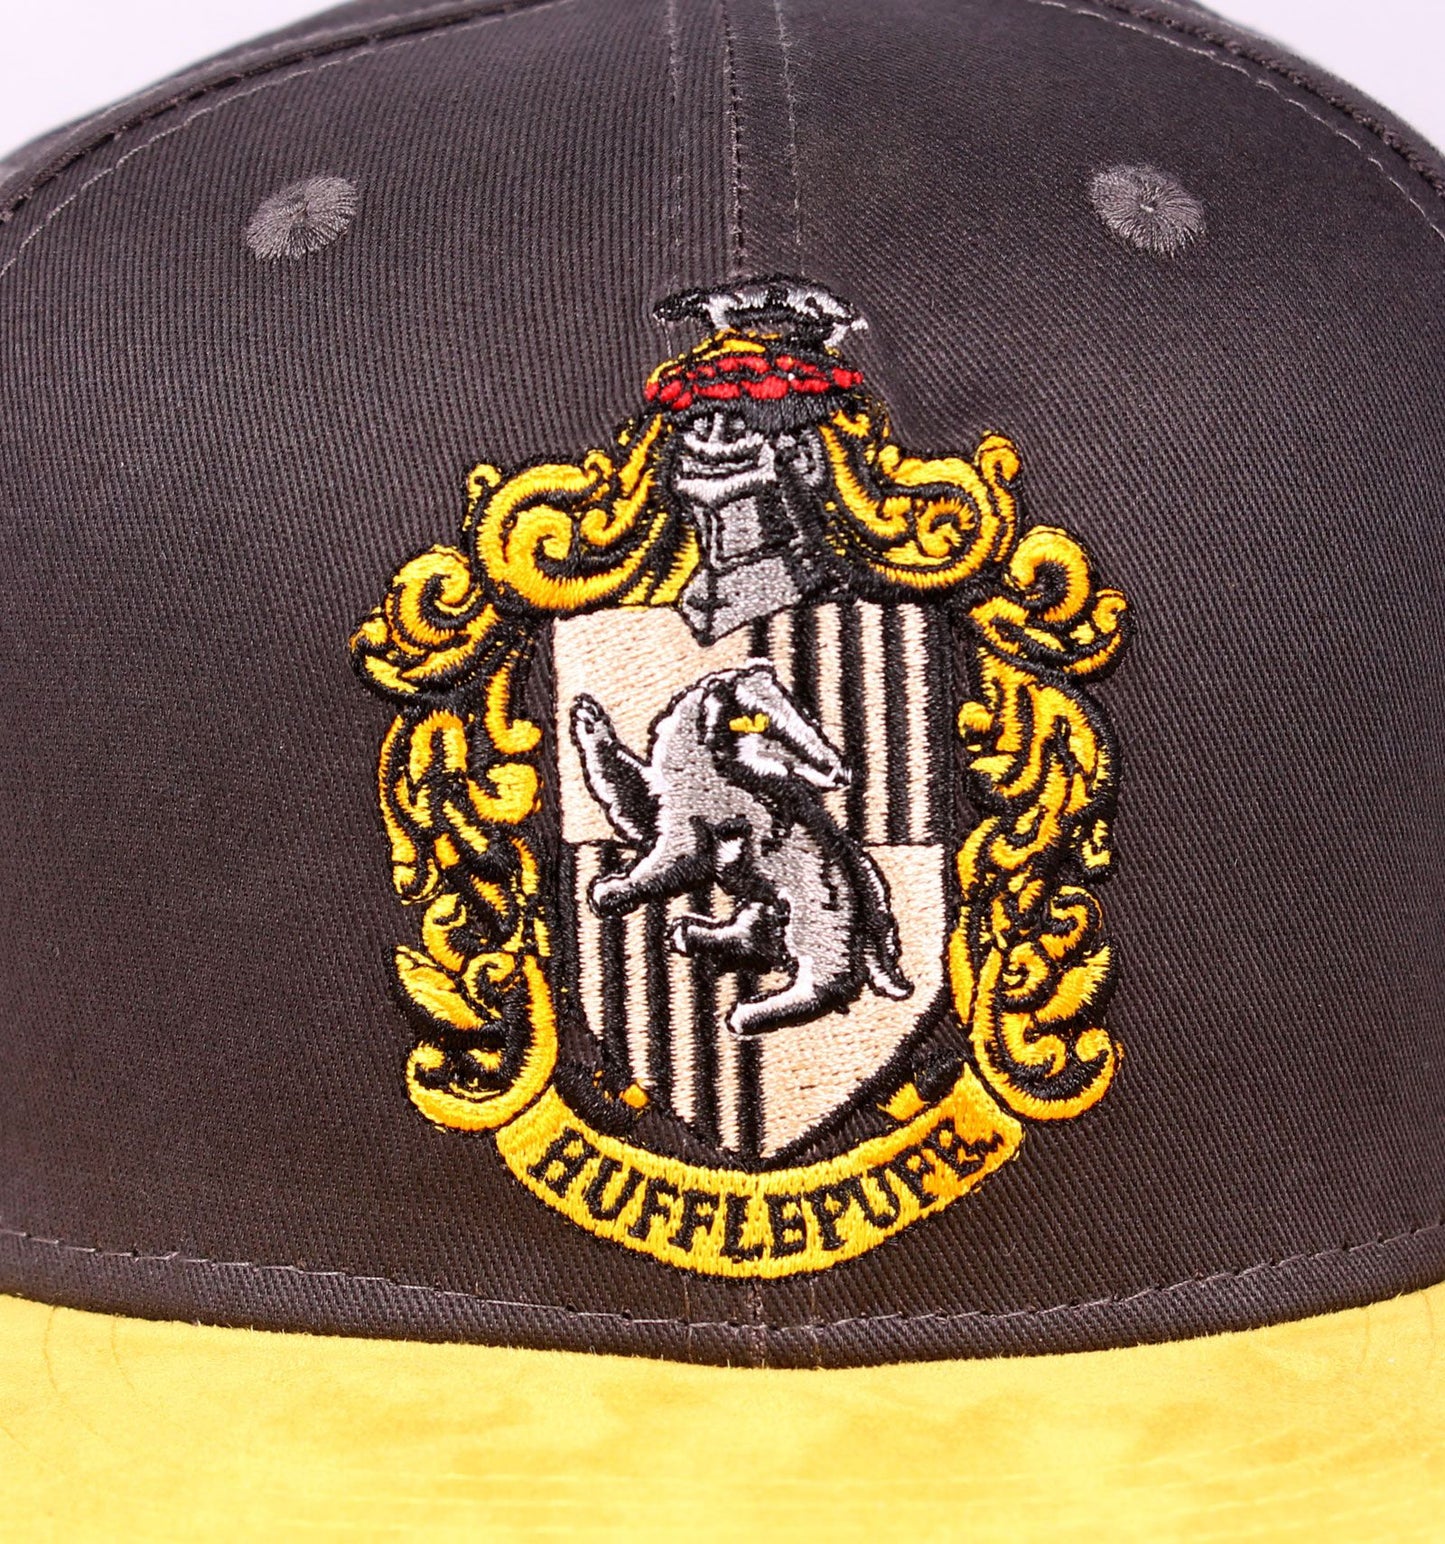 Casquette Harry Potter - Hufflepuff School